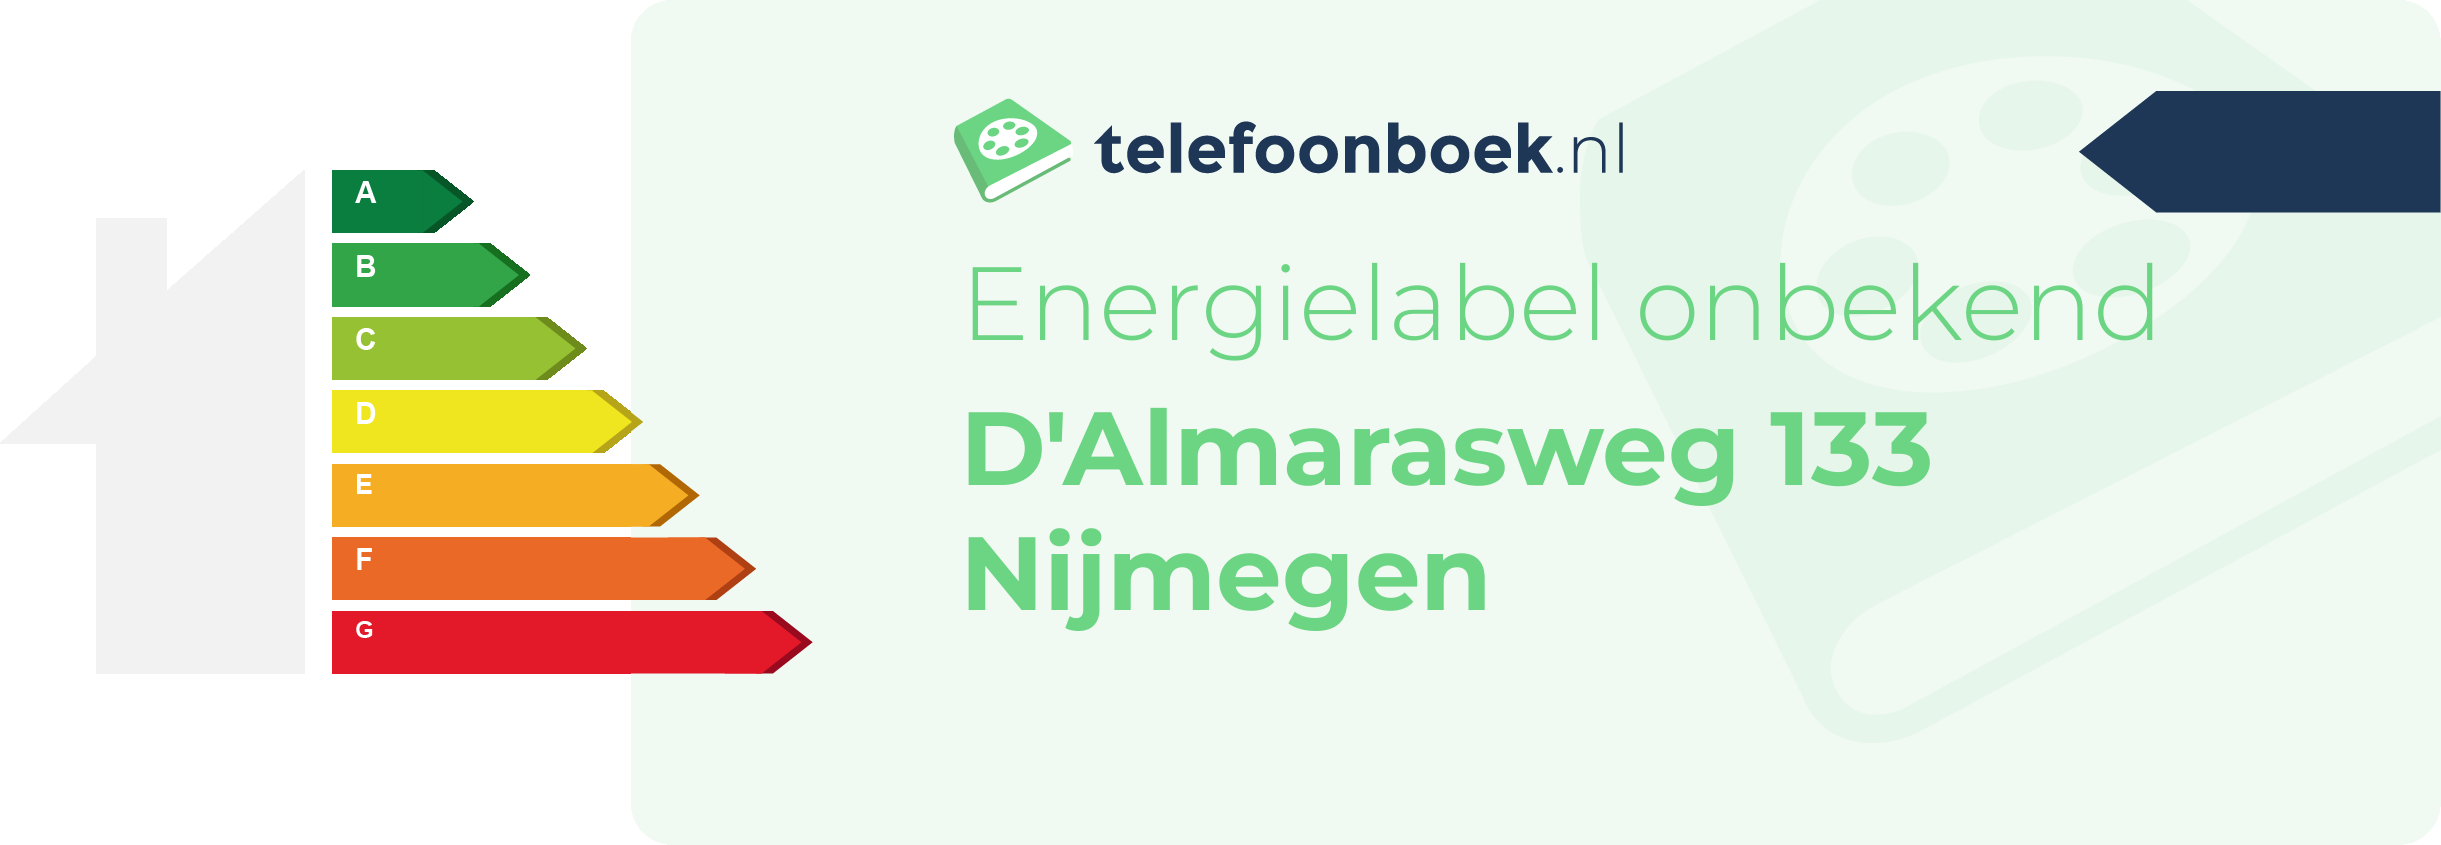 Energielabel D'Almarasweg 133 Nijmegen